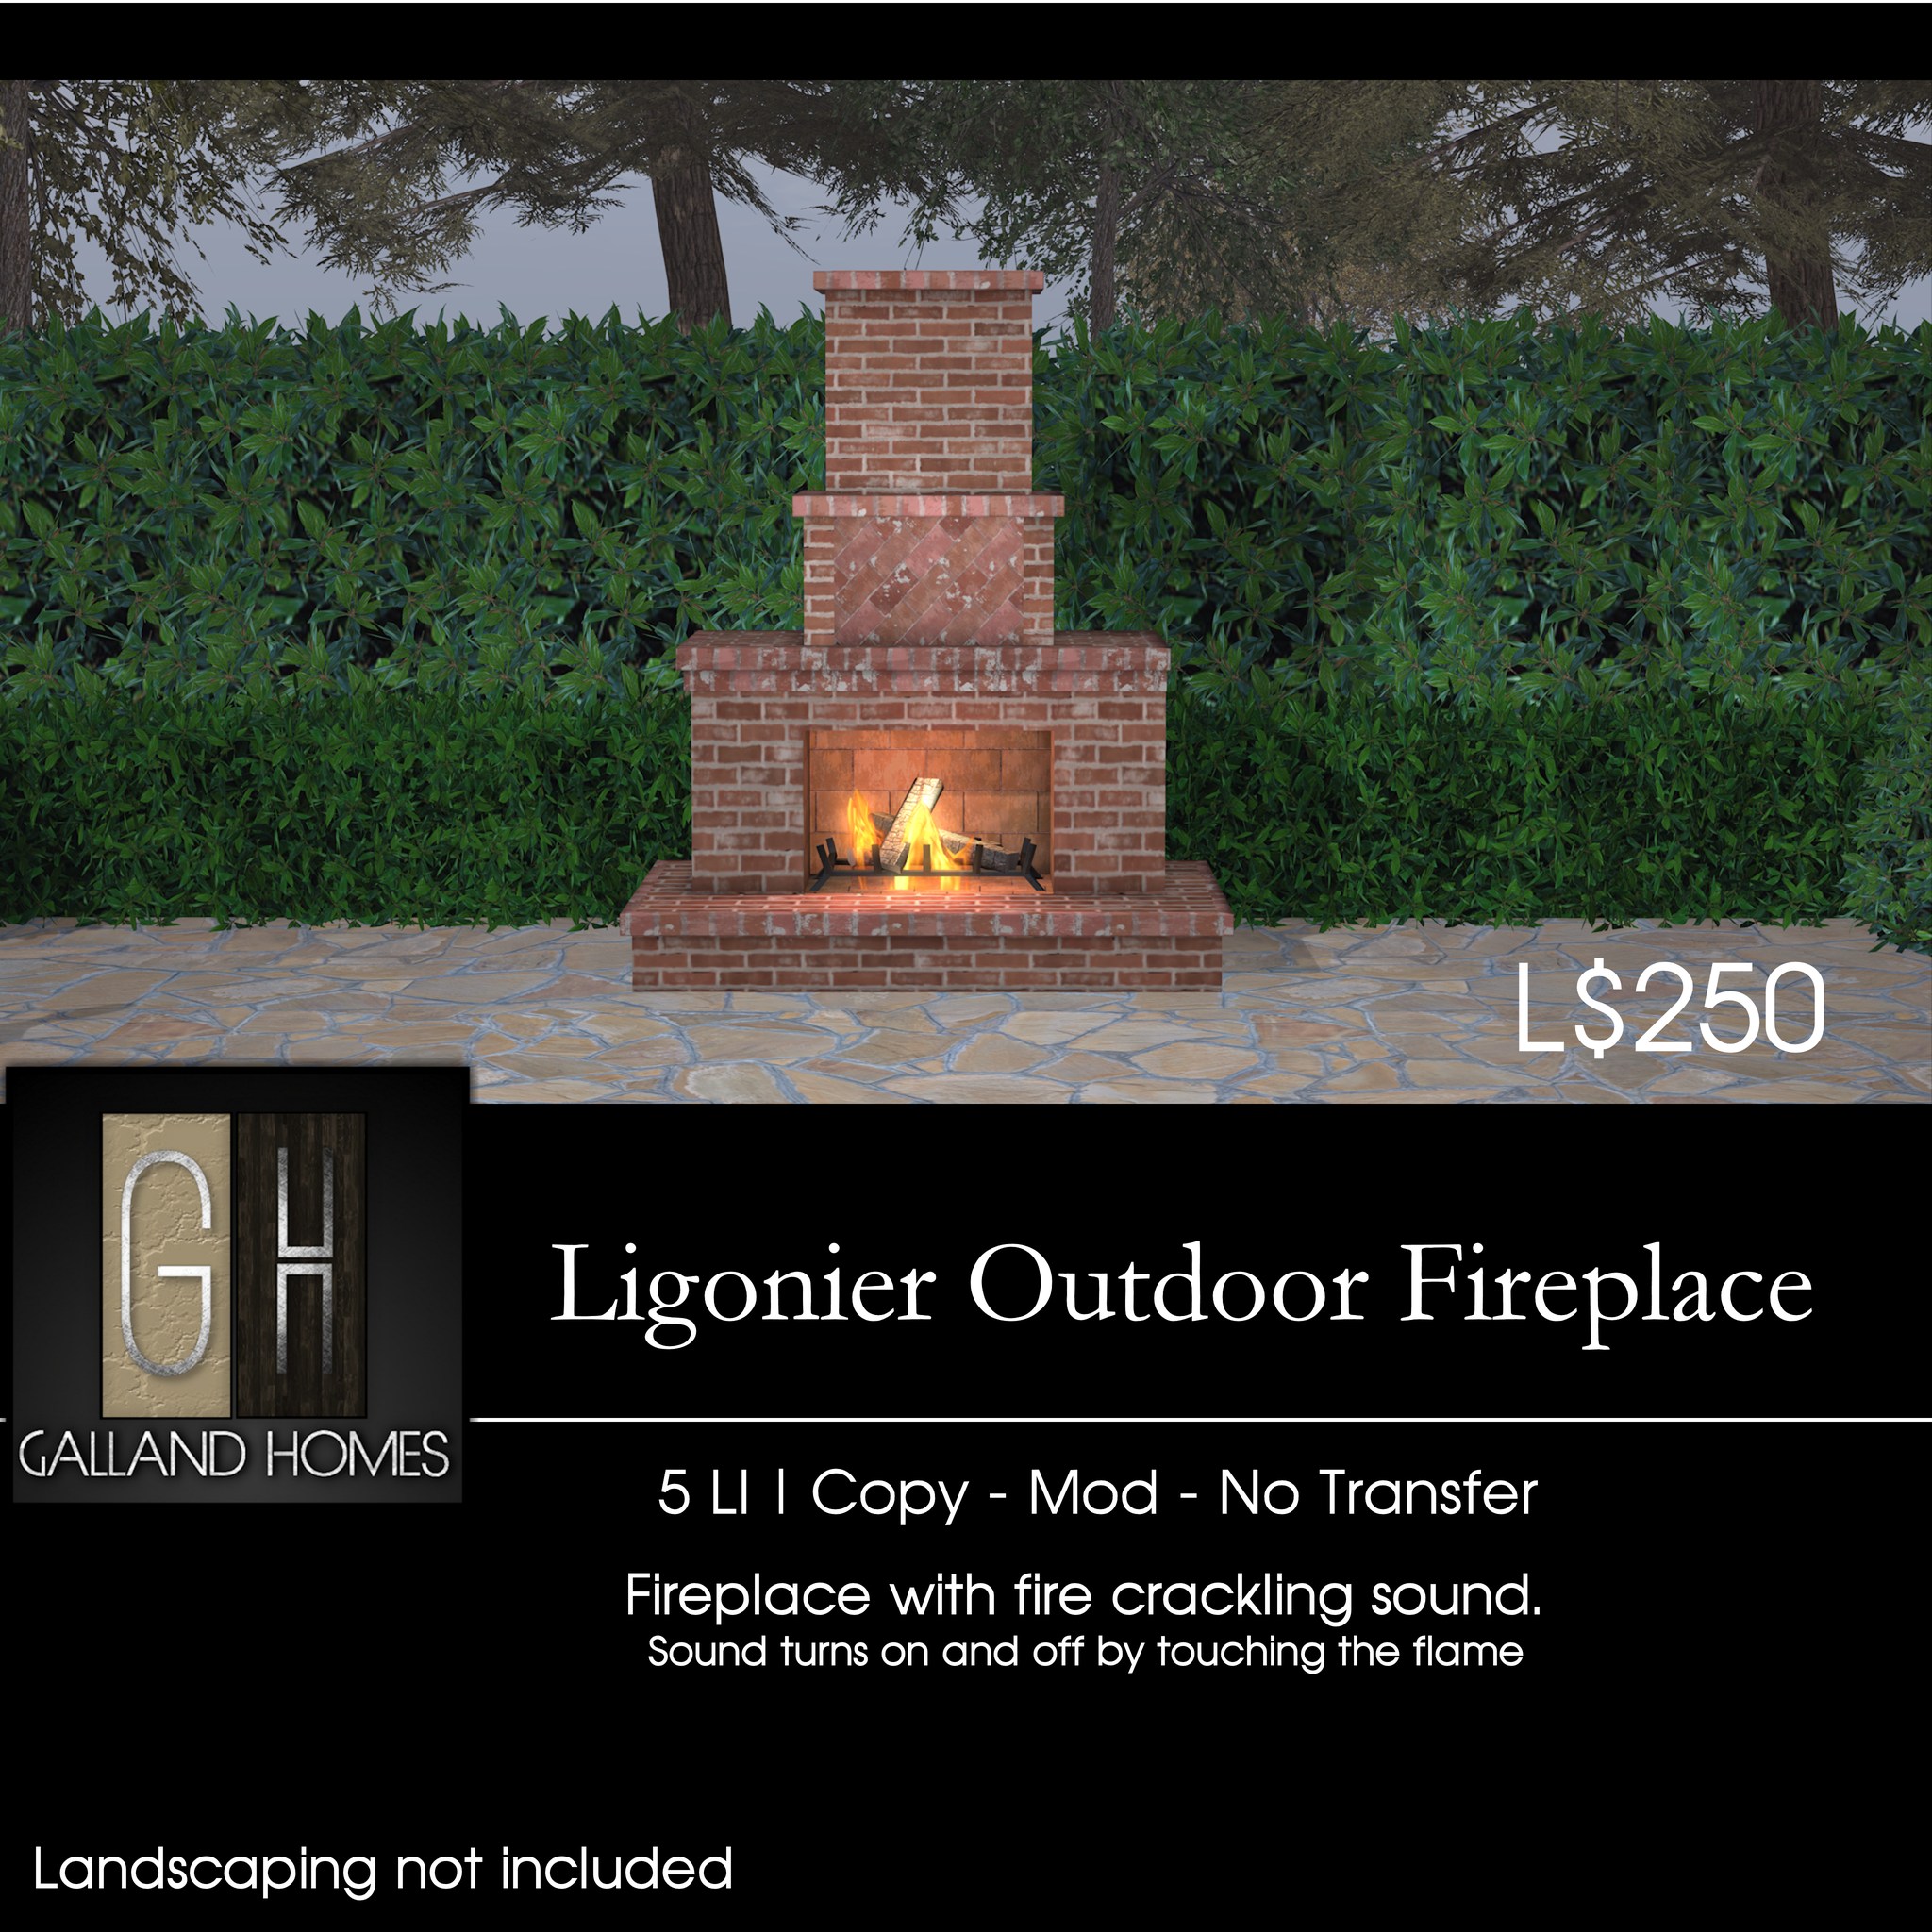 Galland Homes – Ligonier Outdoor Fireplace